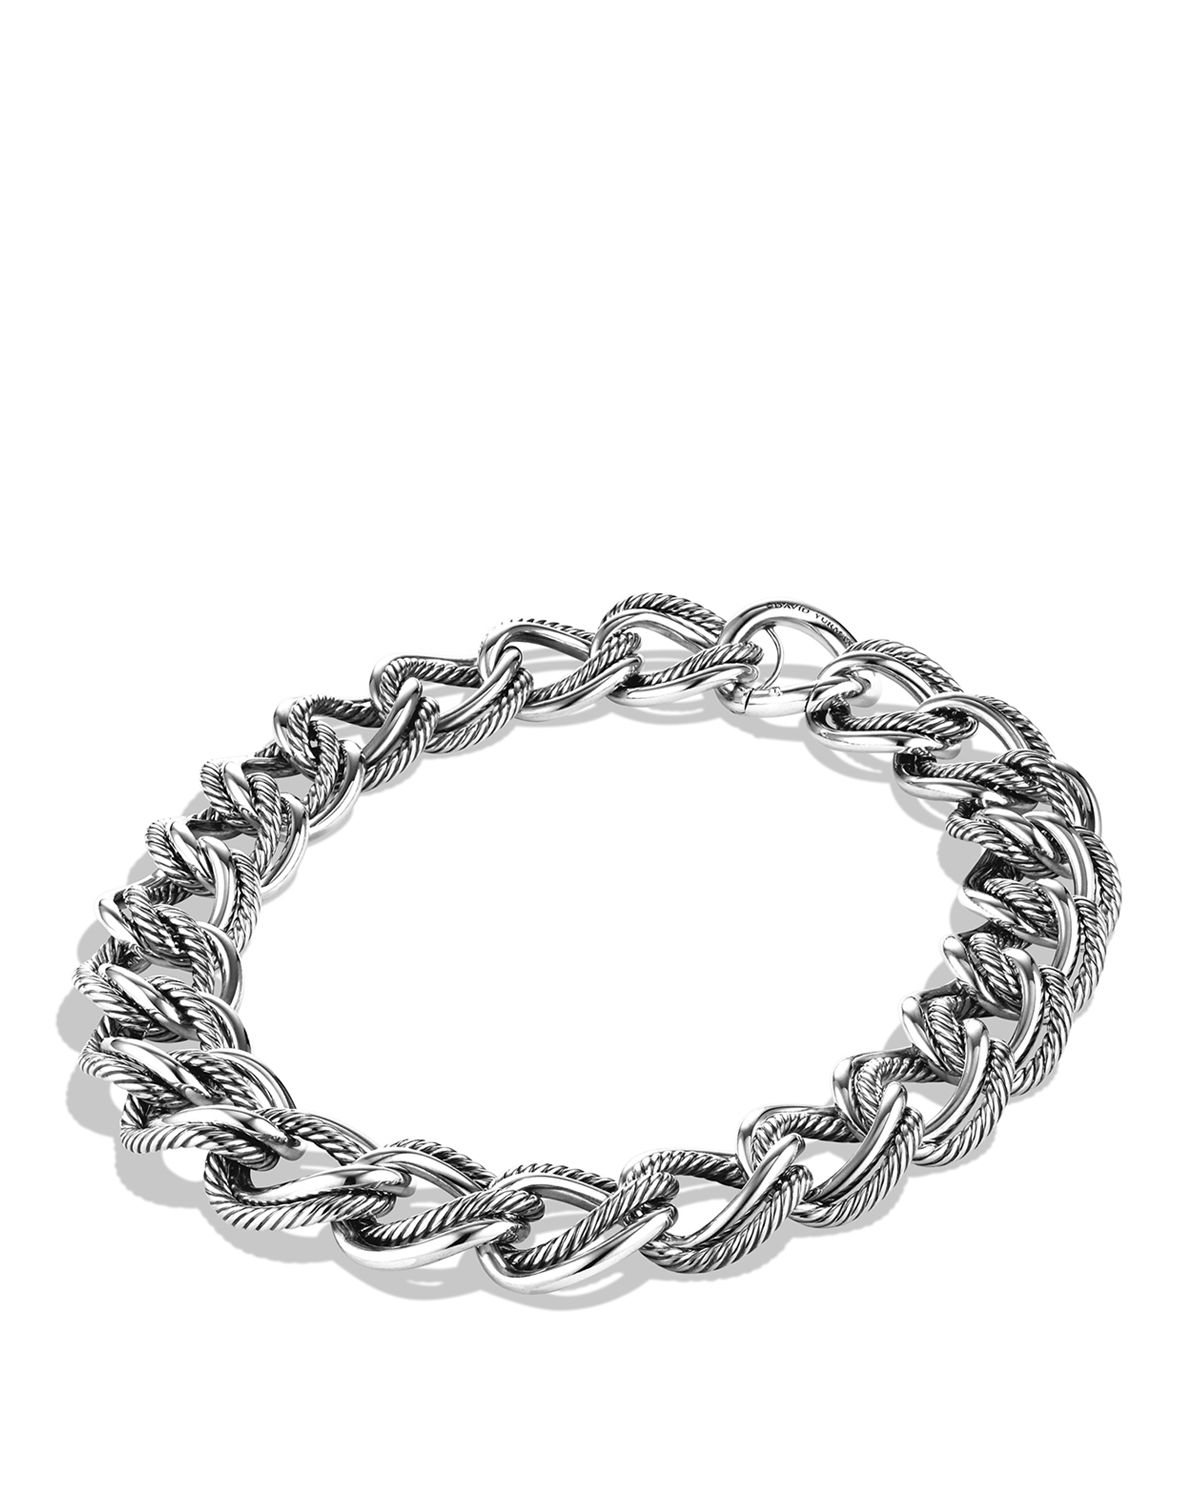 David Yurman Curb Link Wide Necklace in Silver (Metallic) - Lyst